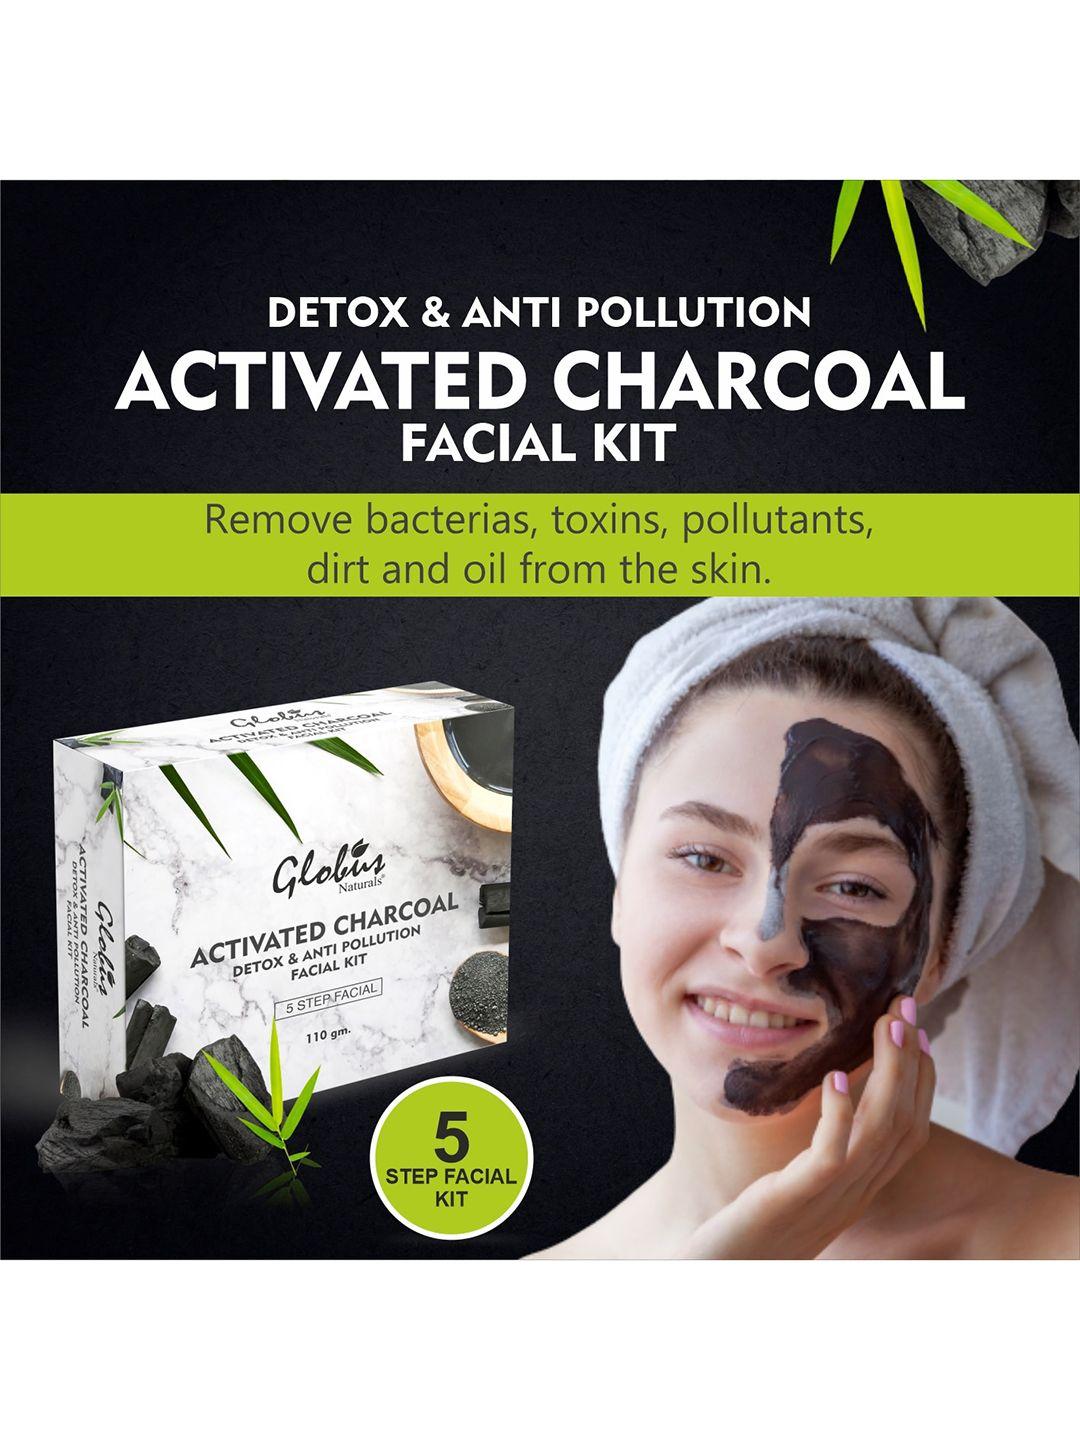 globus naturals charcoal facial kit for skin detoxifying & anti acne